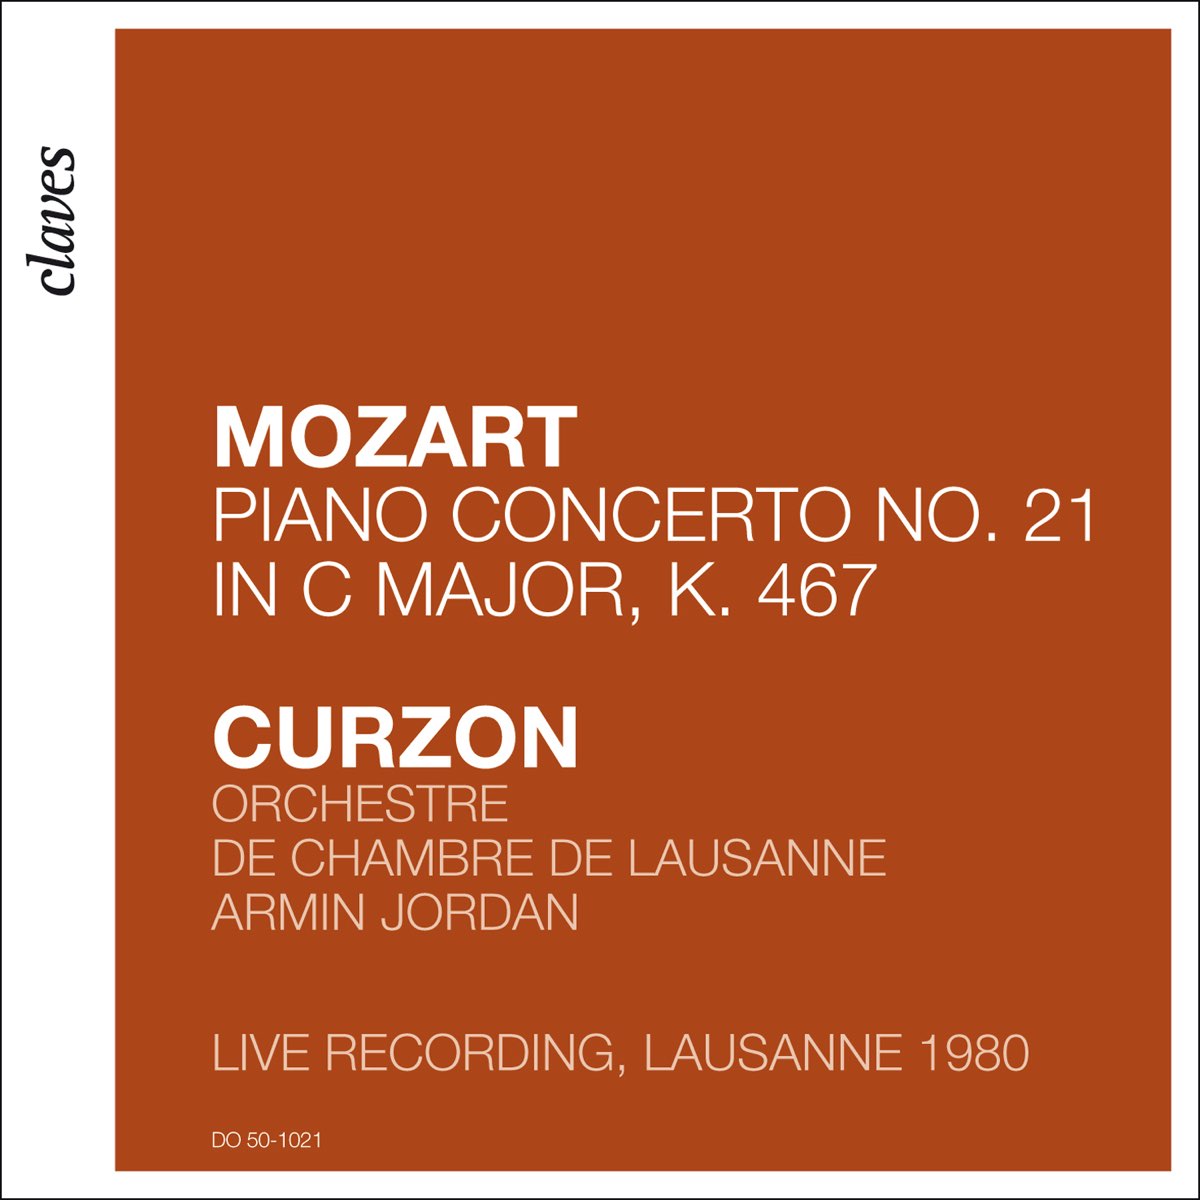 Mozart: Piano Concerto No. 21 in C Major, K. 467 "Elvira Madigan" (Live in  Lausanne 1980) by Sir Clifford Curzon, Orchestre de Chambre de Lausanne &  Armin Jordan on Apple Music